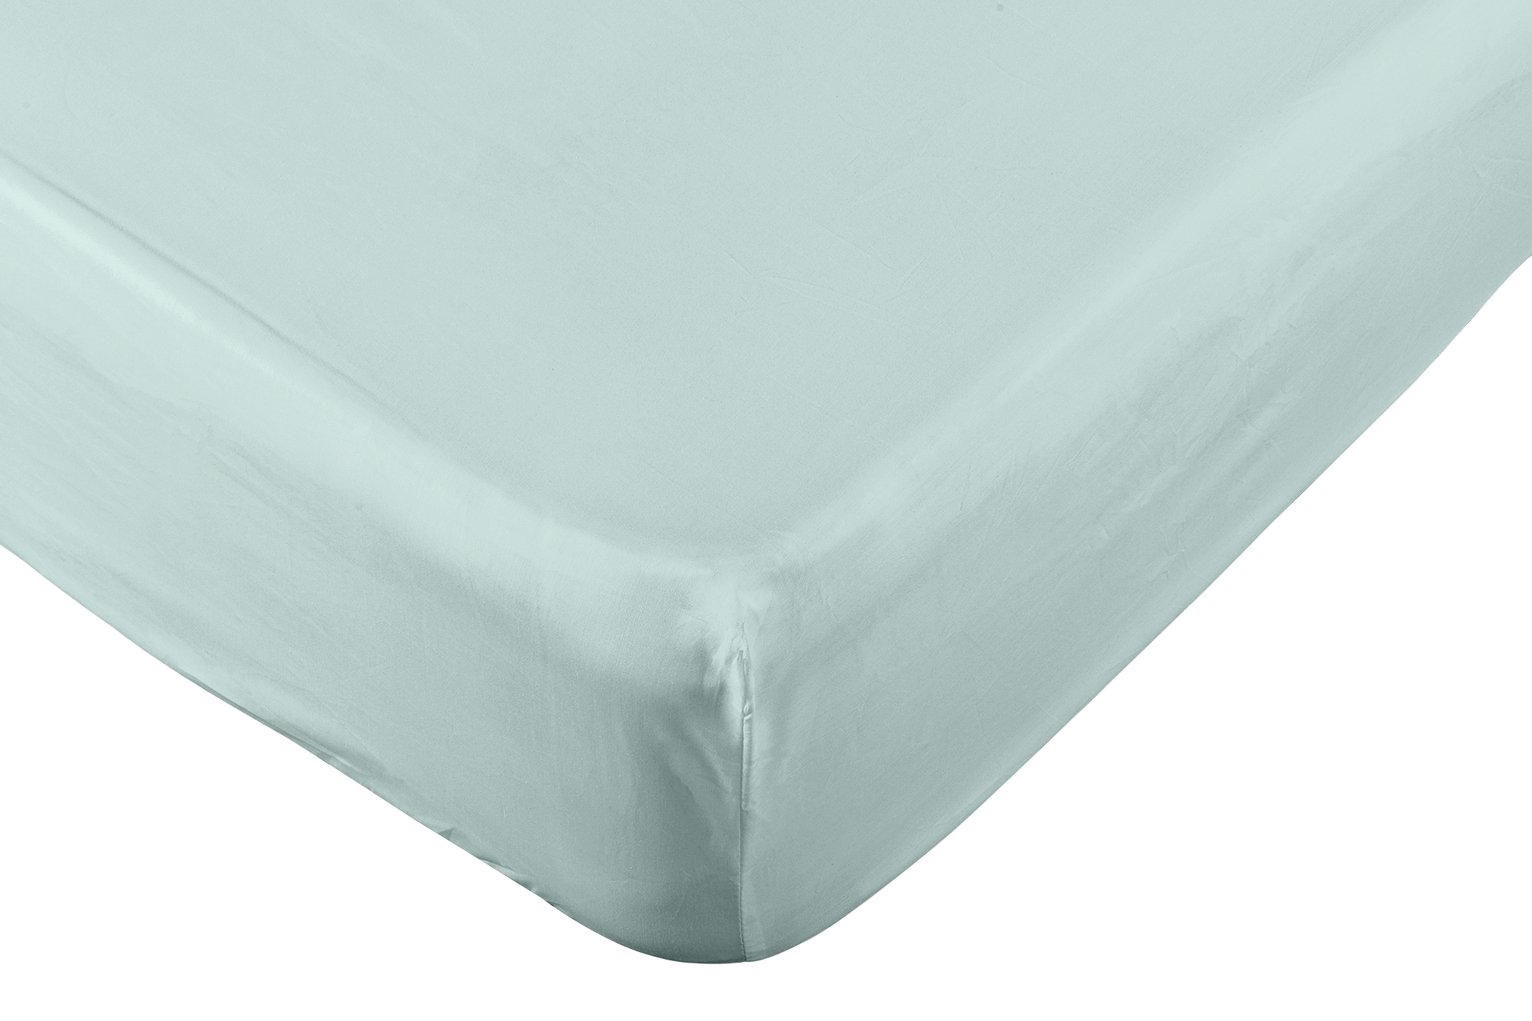 Argos Home Easycare 100% Cotton 28cm Fitted Sheet - Kingsize